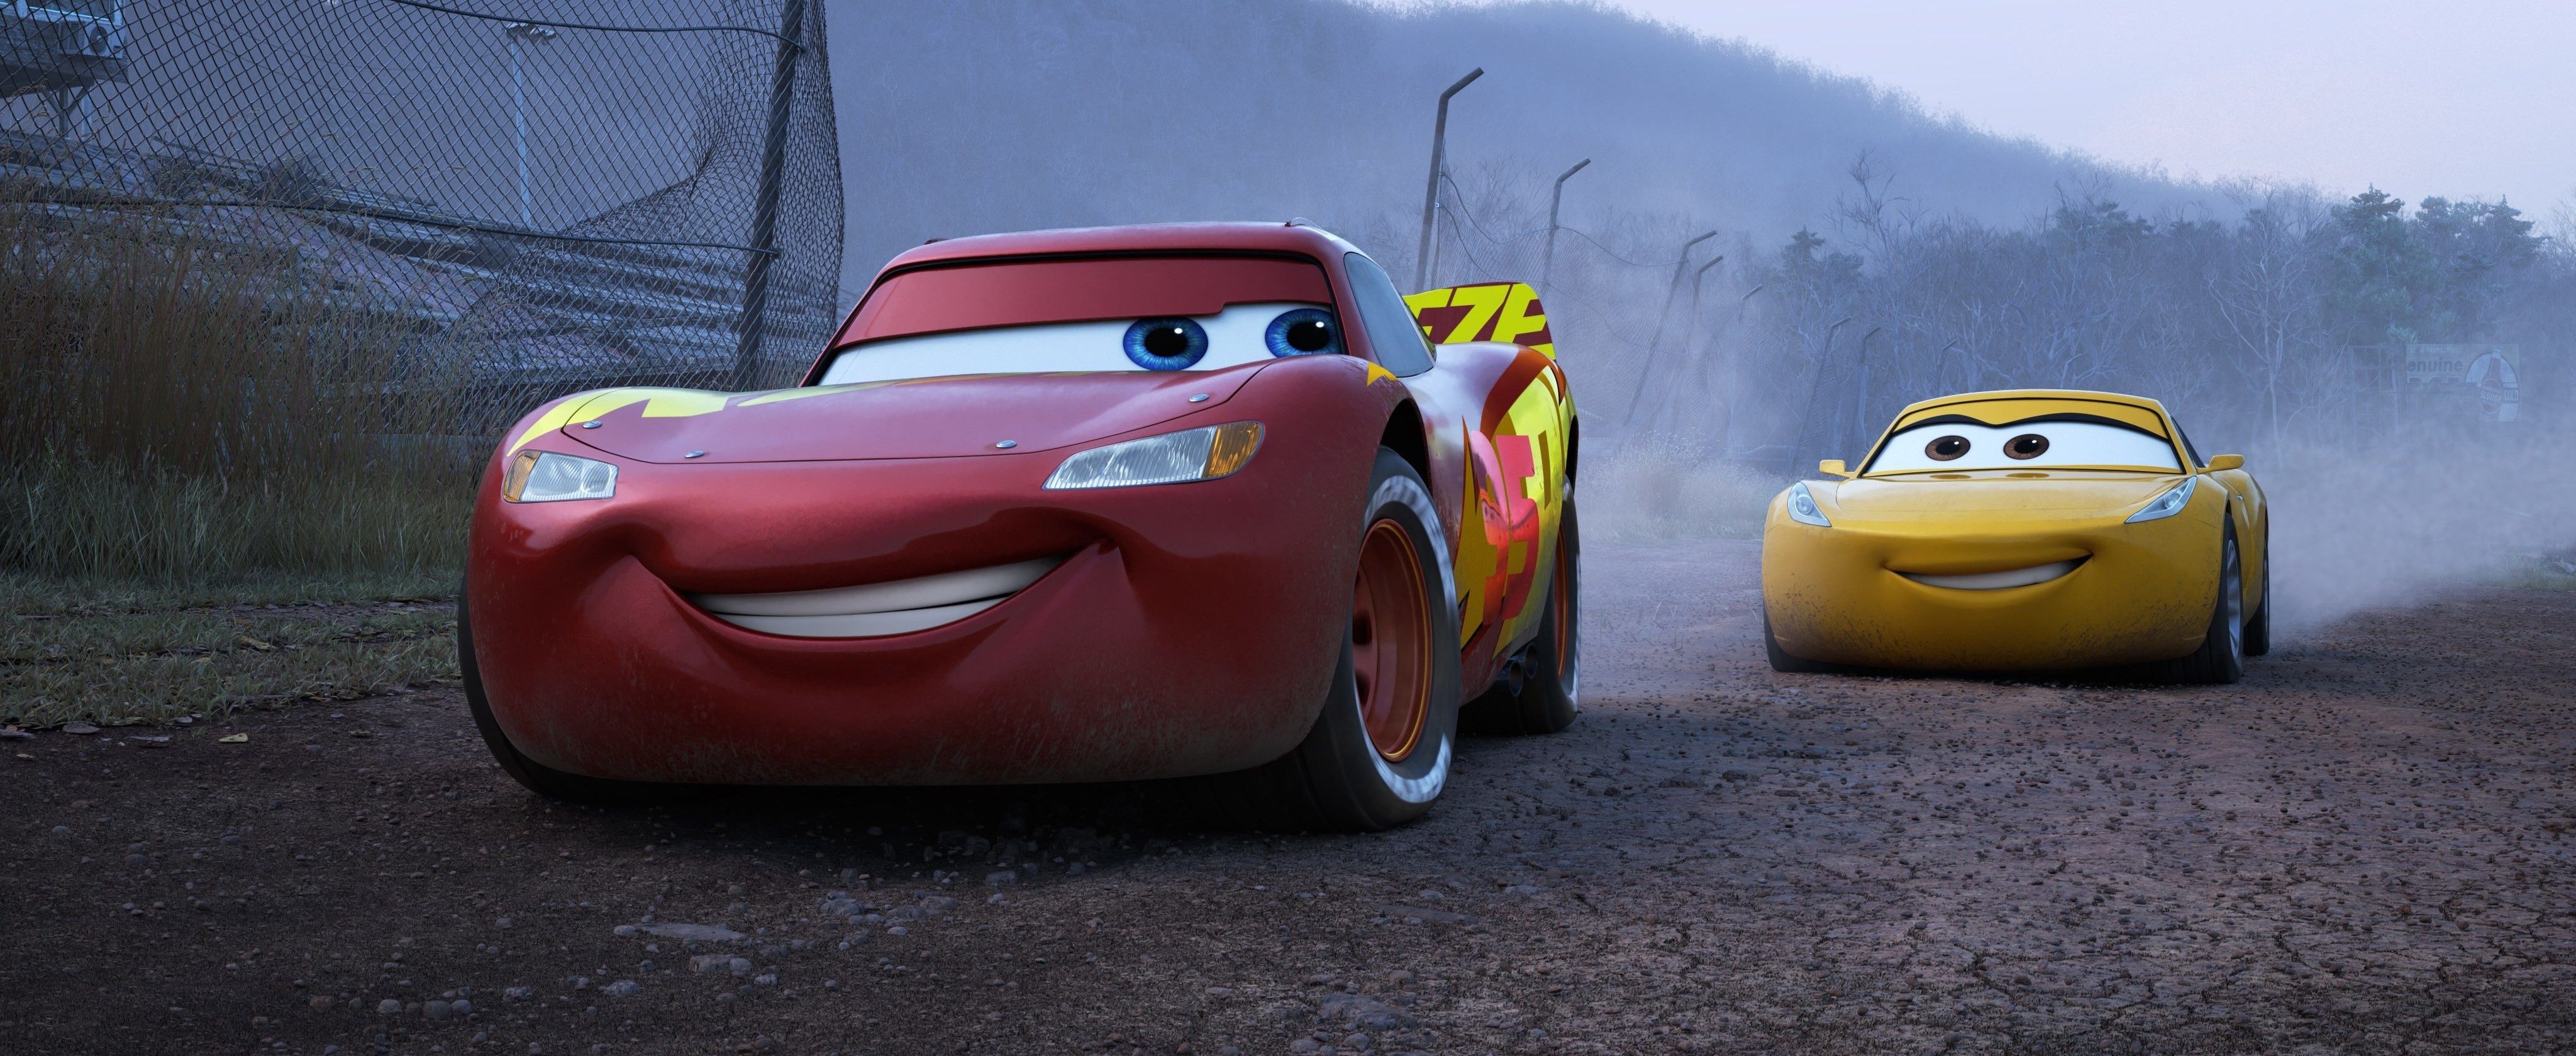 Wallpaper Cars Lightning McQueen, Cruz Ramirez, Animation, 4K